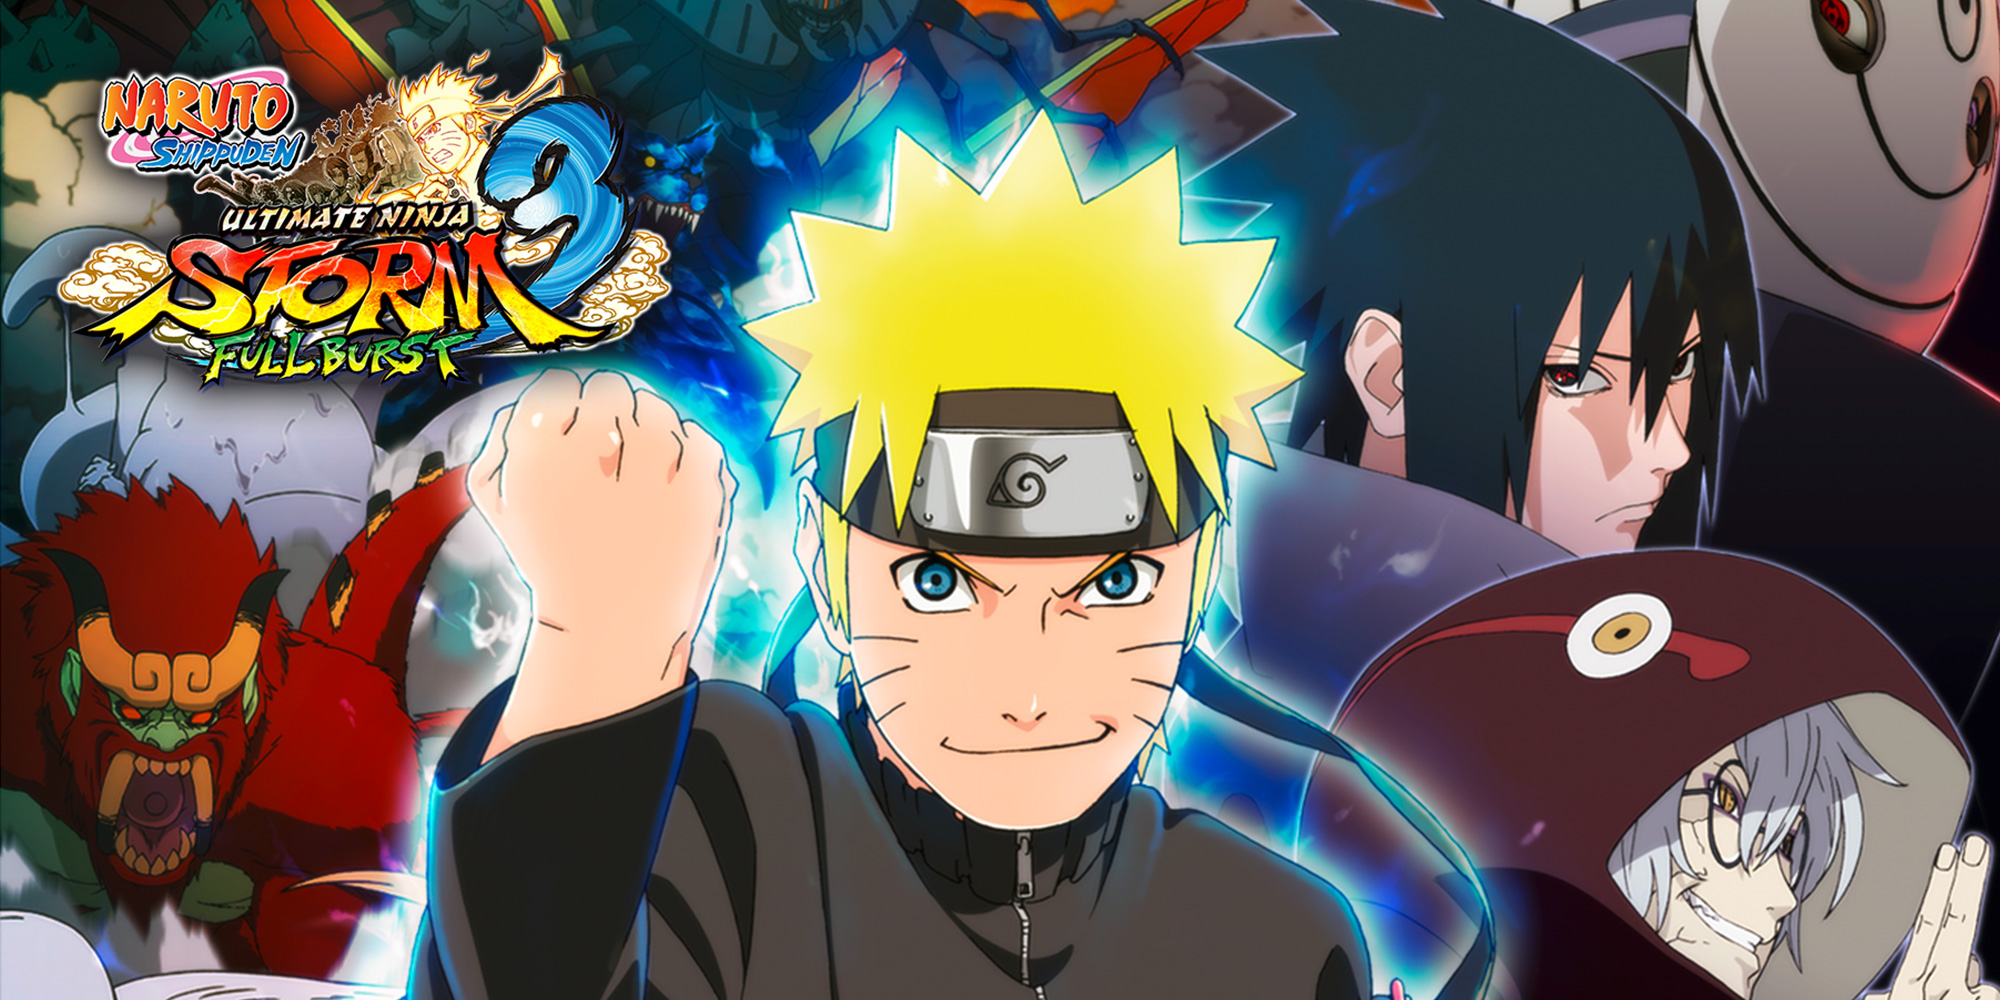 Dicas para Naruto Online: Como conseguir novo(s) Ninja(s)